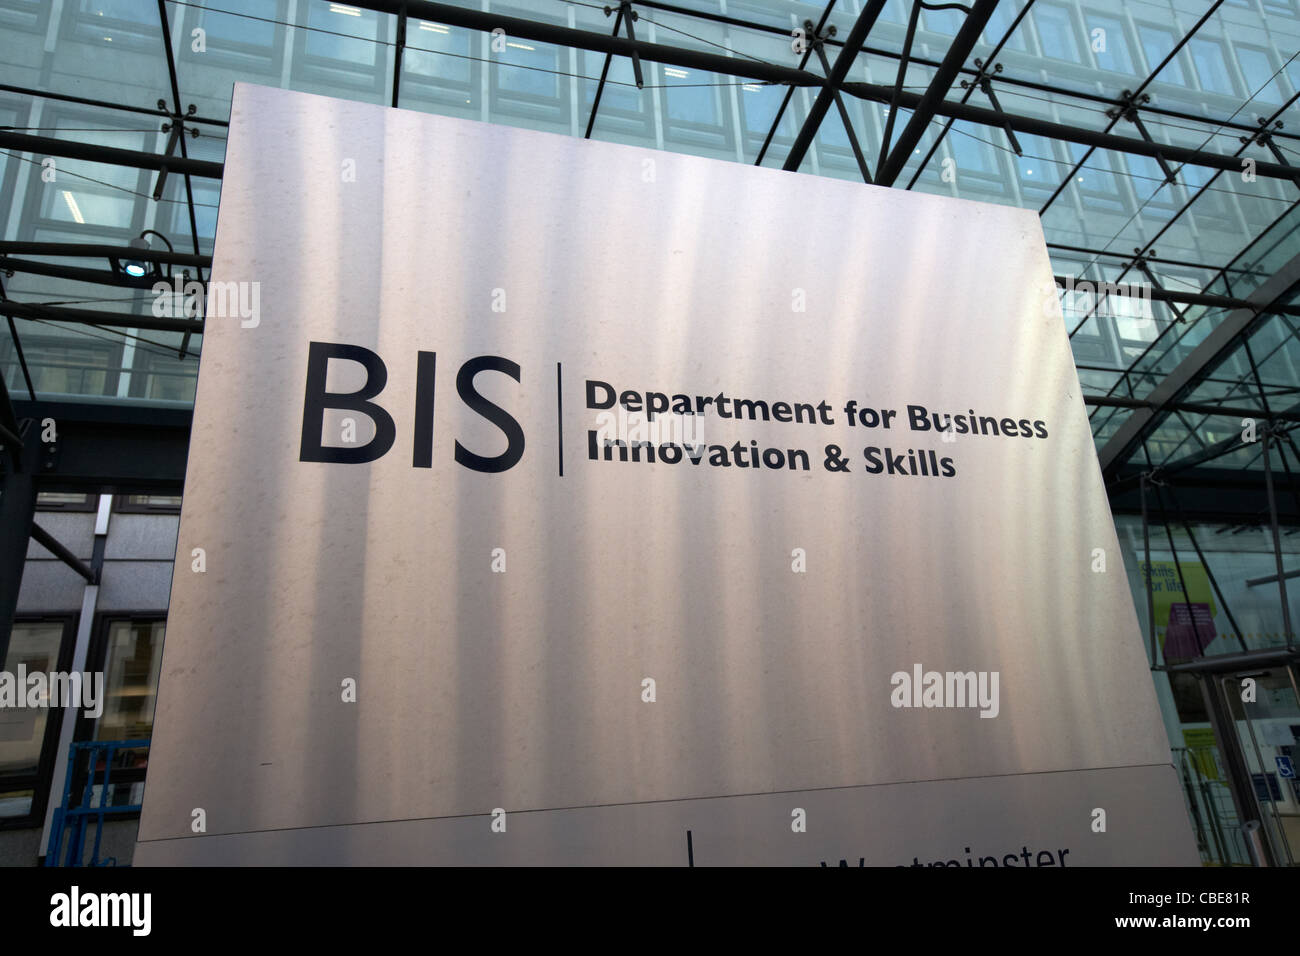 BIS le department for business innovation and skills London England uk united kingdom Banque D'Images